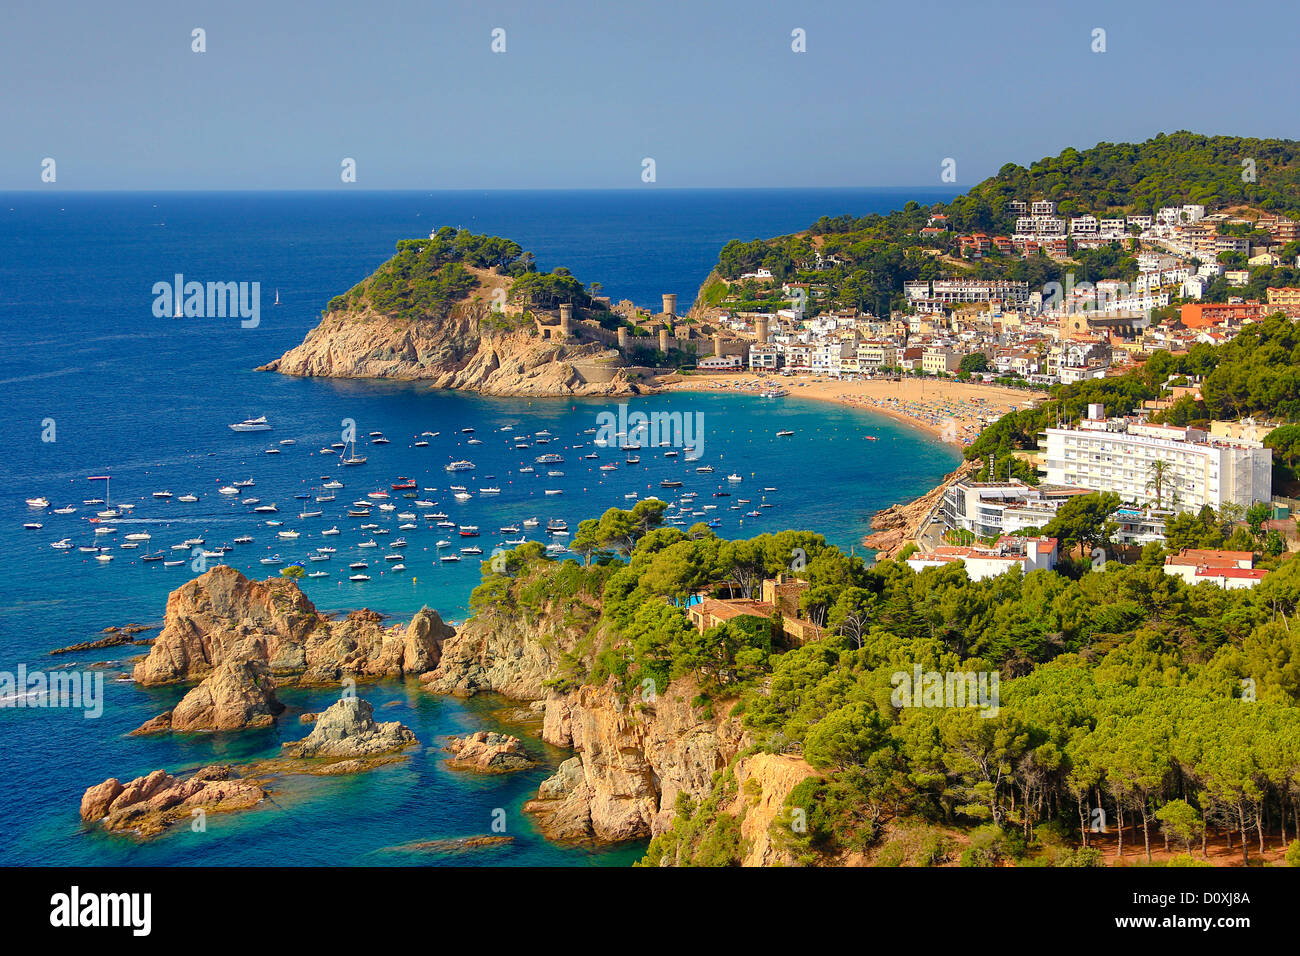 Spain, Europe, Catalonia, Costa Brava Coast, Tossa de Mar, town, beach, blue, boats, bright, cliff, coast, colourful, Costa Brav Stock Photo